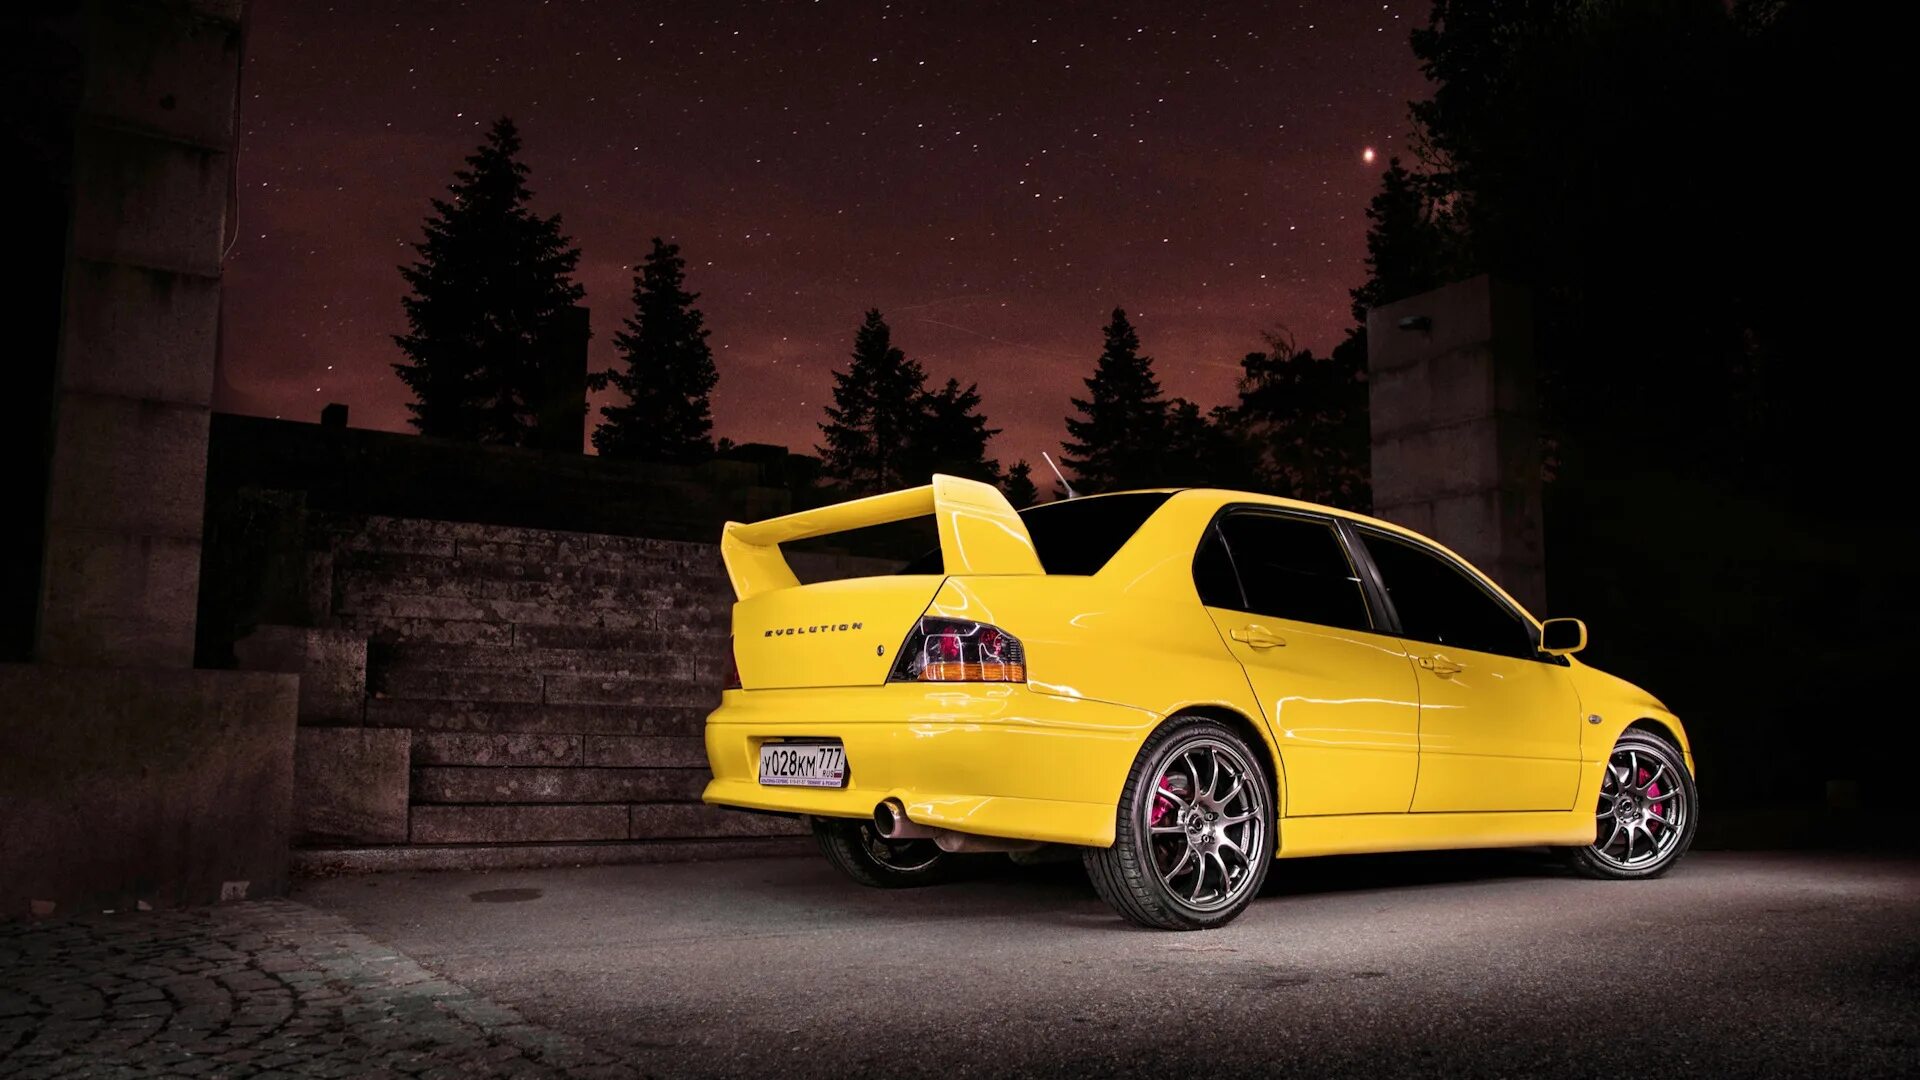 Color tune. Лансер Эволюшн 7. 2001 Mitsubishi Lancer Evolution VII. Mitsubishi Lancer Evolution 8. Желтый Lancer Evolution 7.